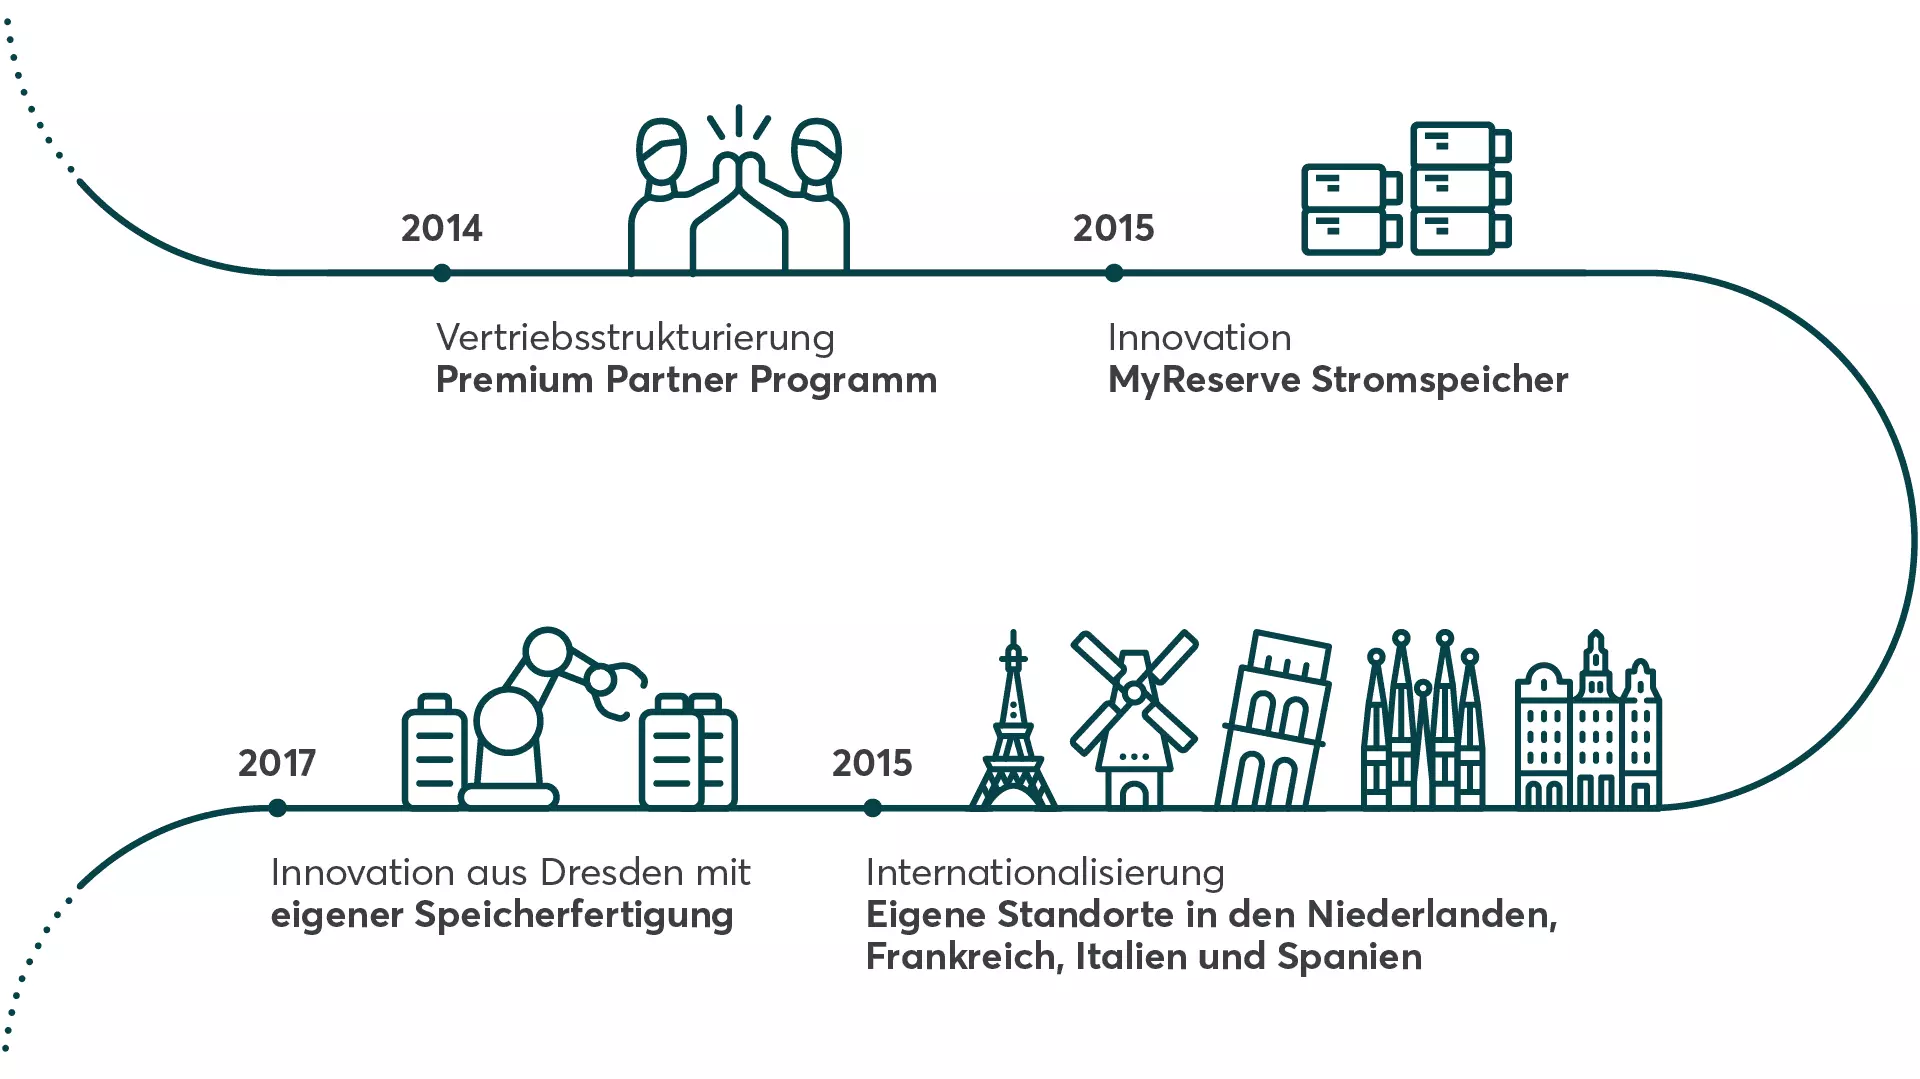 Firmengeschichte Solarwatt 2014 bis 2015